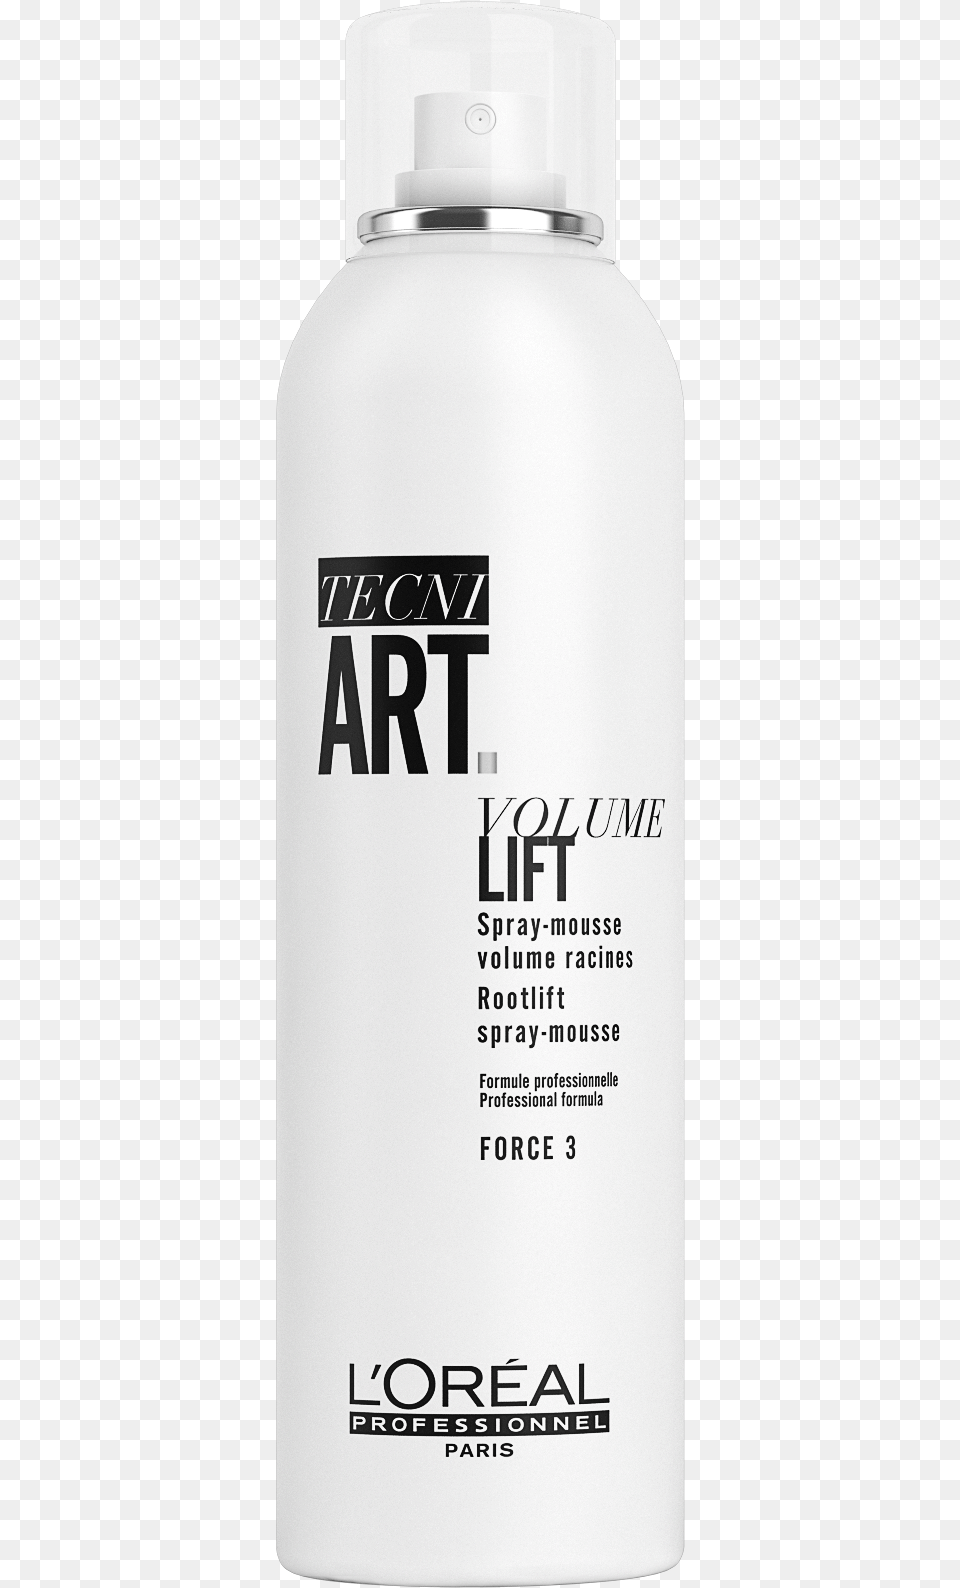 Loreal Logo, Bottle, Shaker, Cosmetics Png